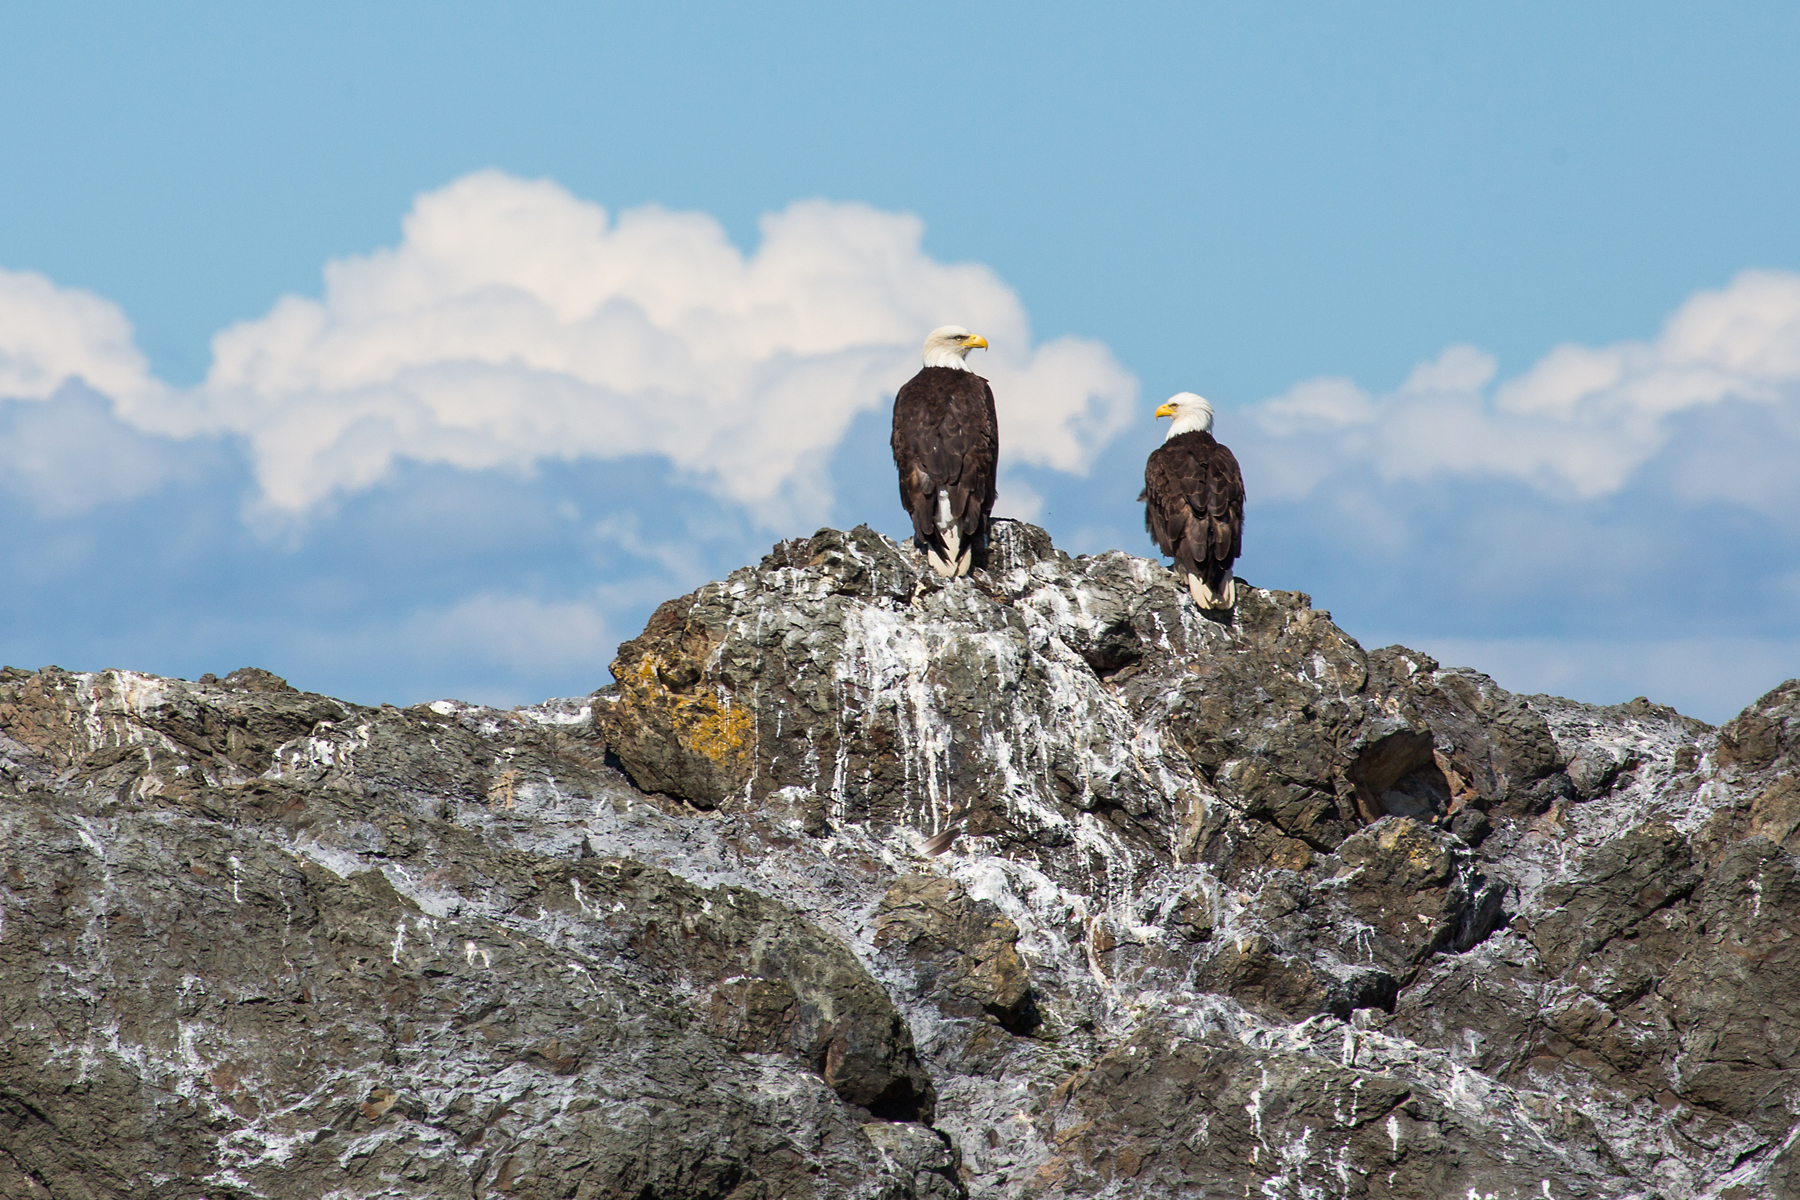 Bald eagles, Puget Sound, Washington, May 2021.  Click for next photo.